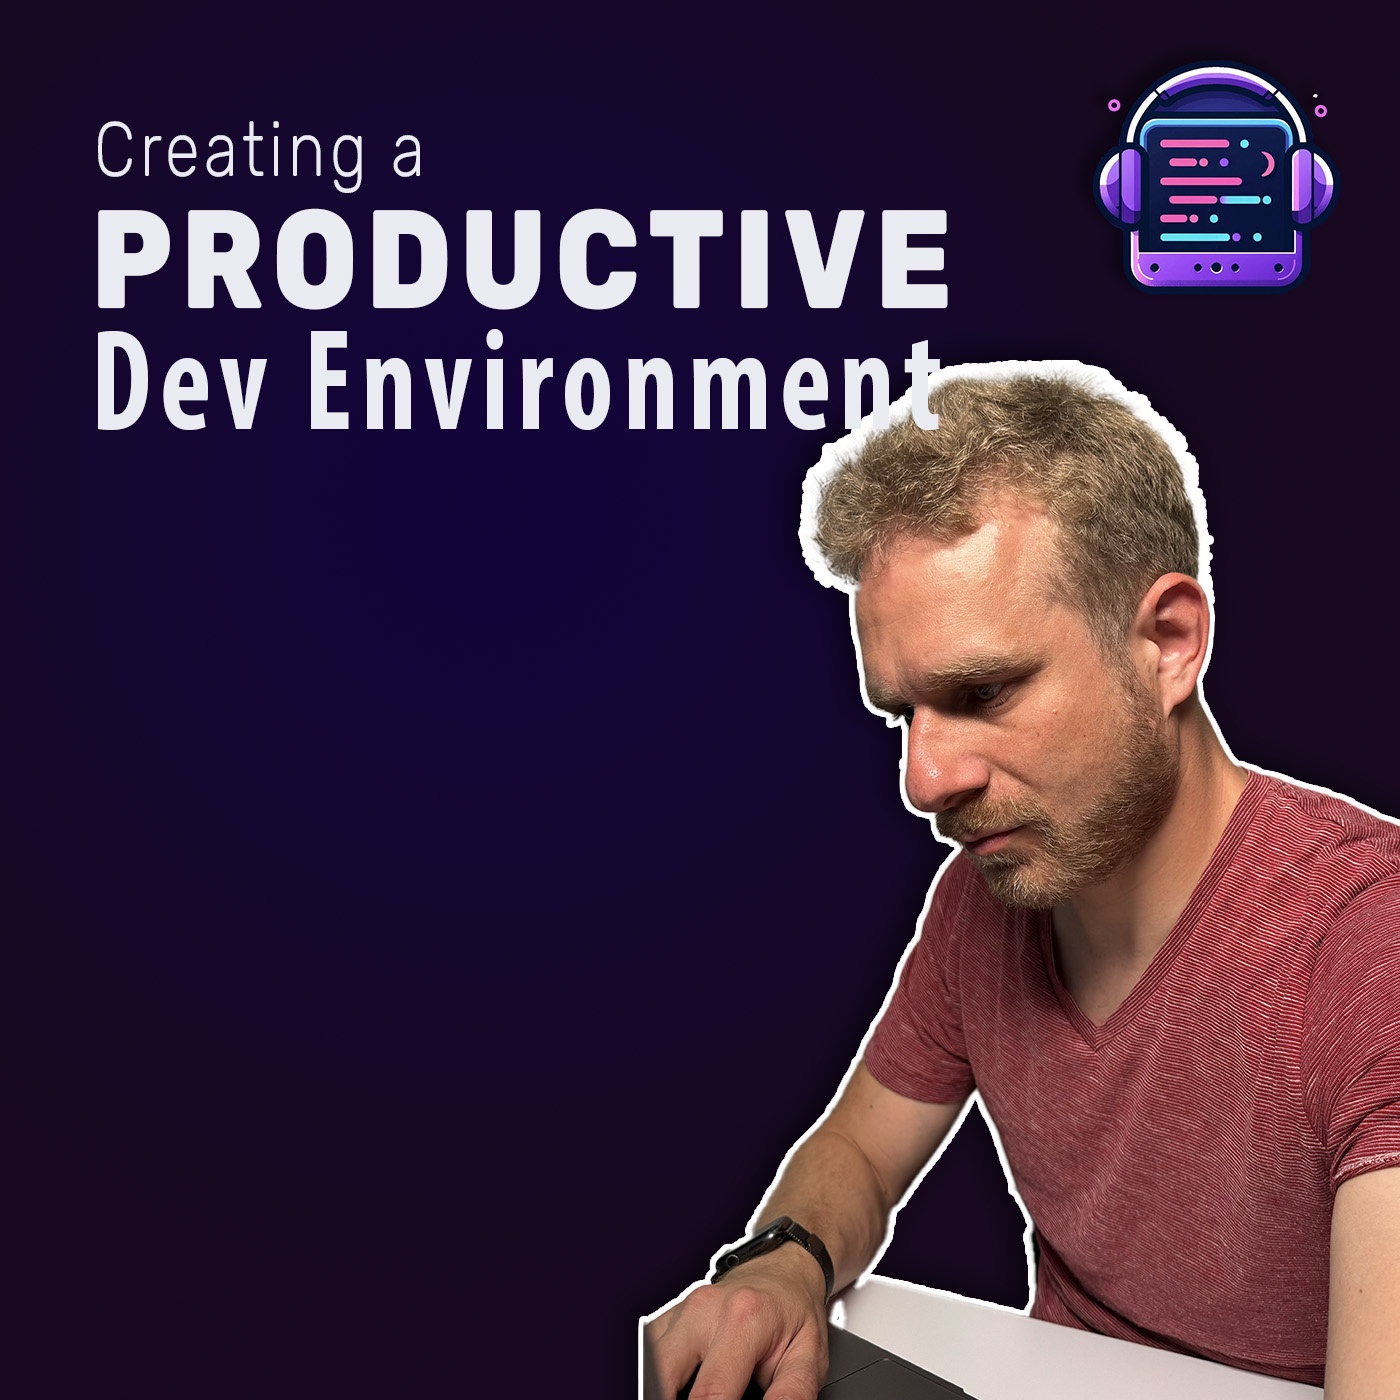 Creating a productive development environment